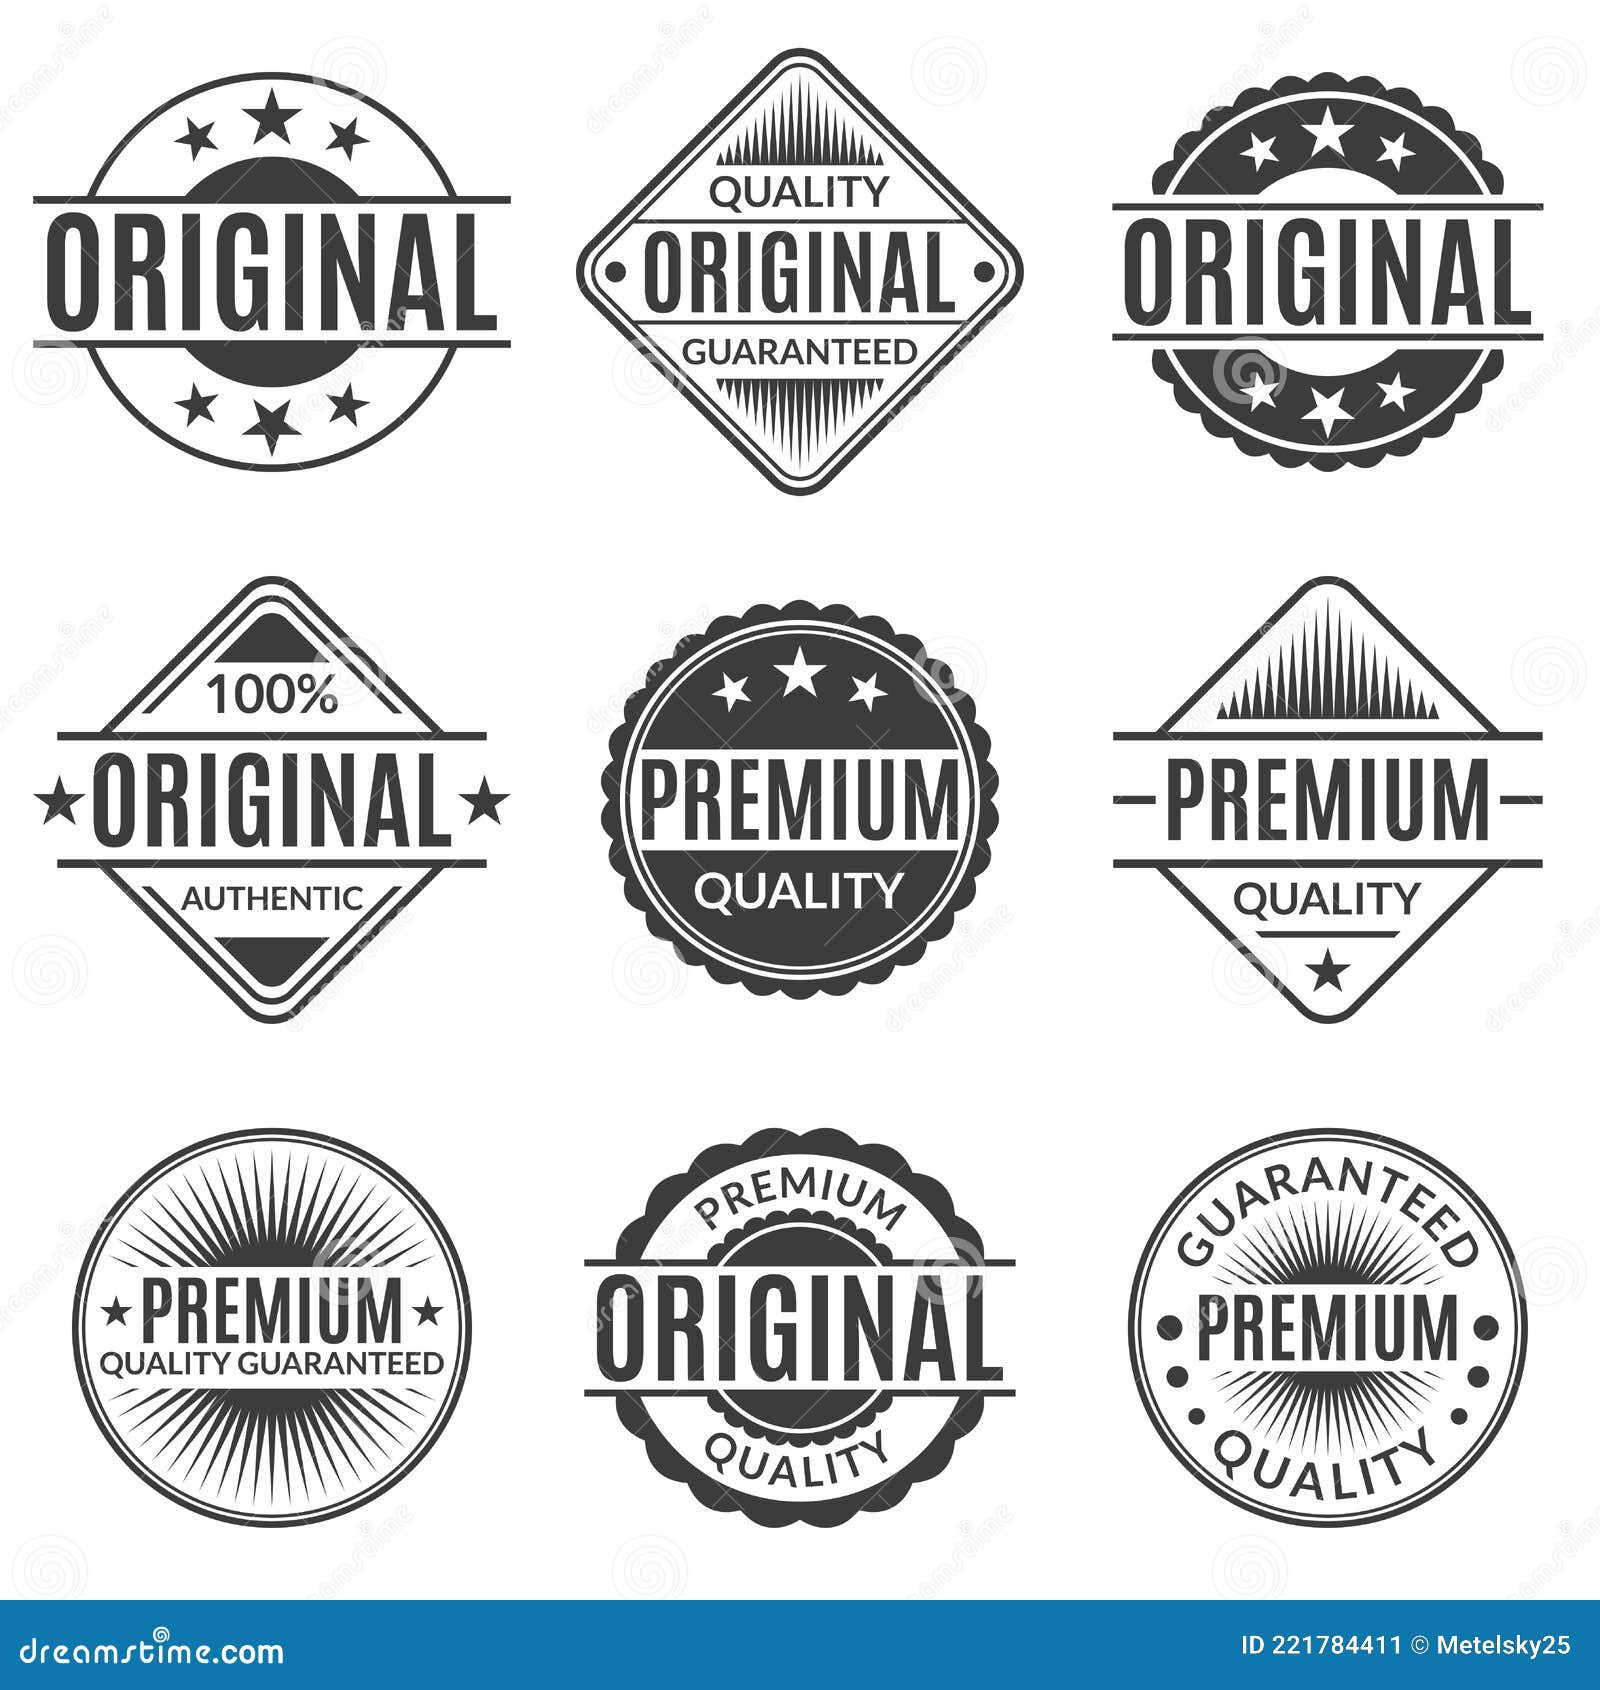 original and premium quality stamp or seal set. guarantee label, emblem or badge collection.  .